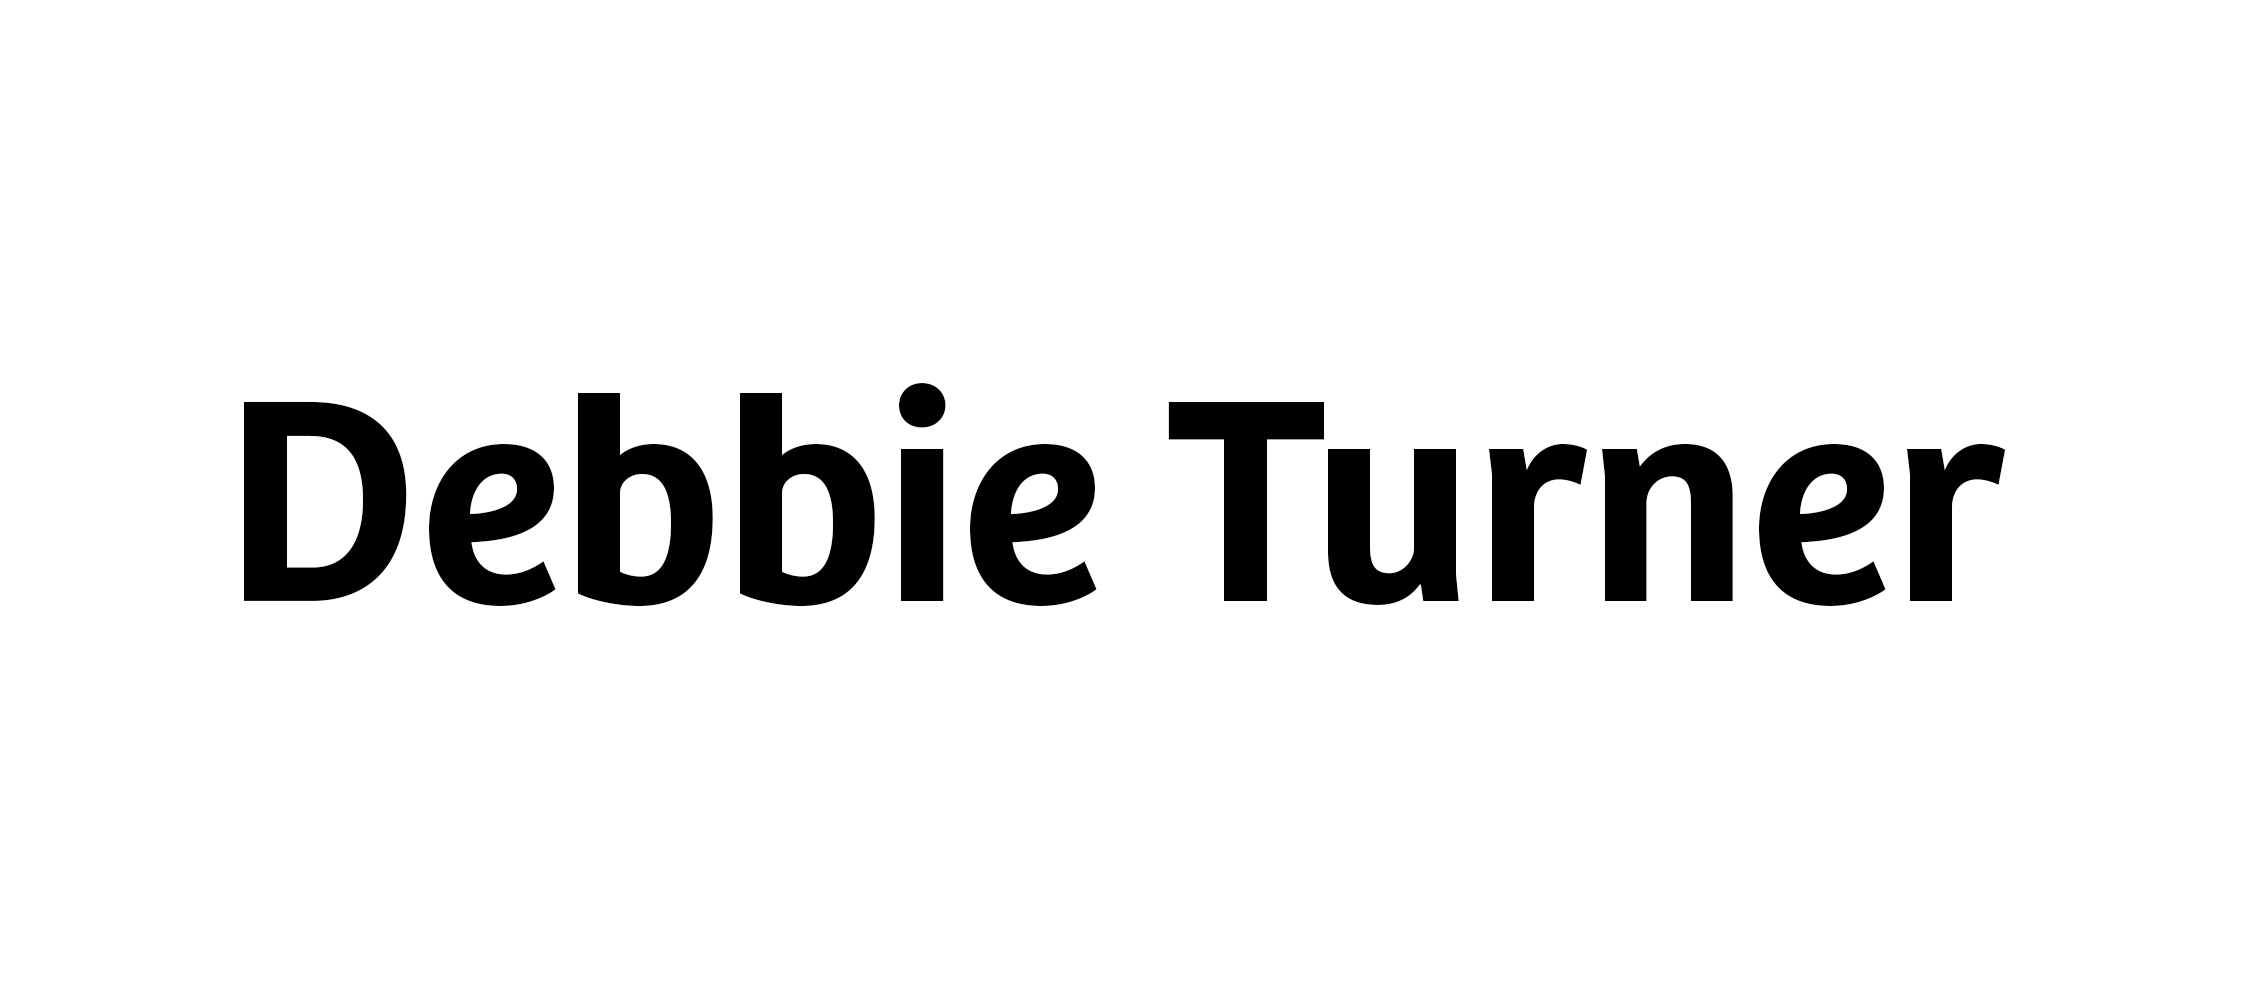 Debbie Turner WEB